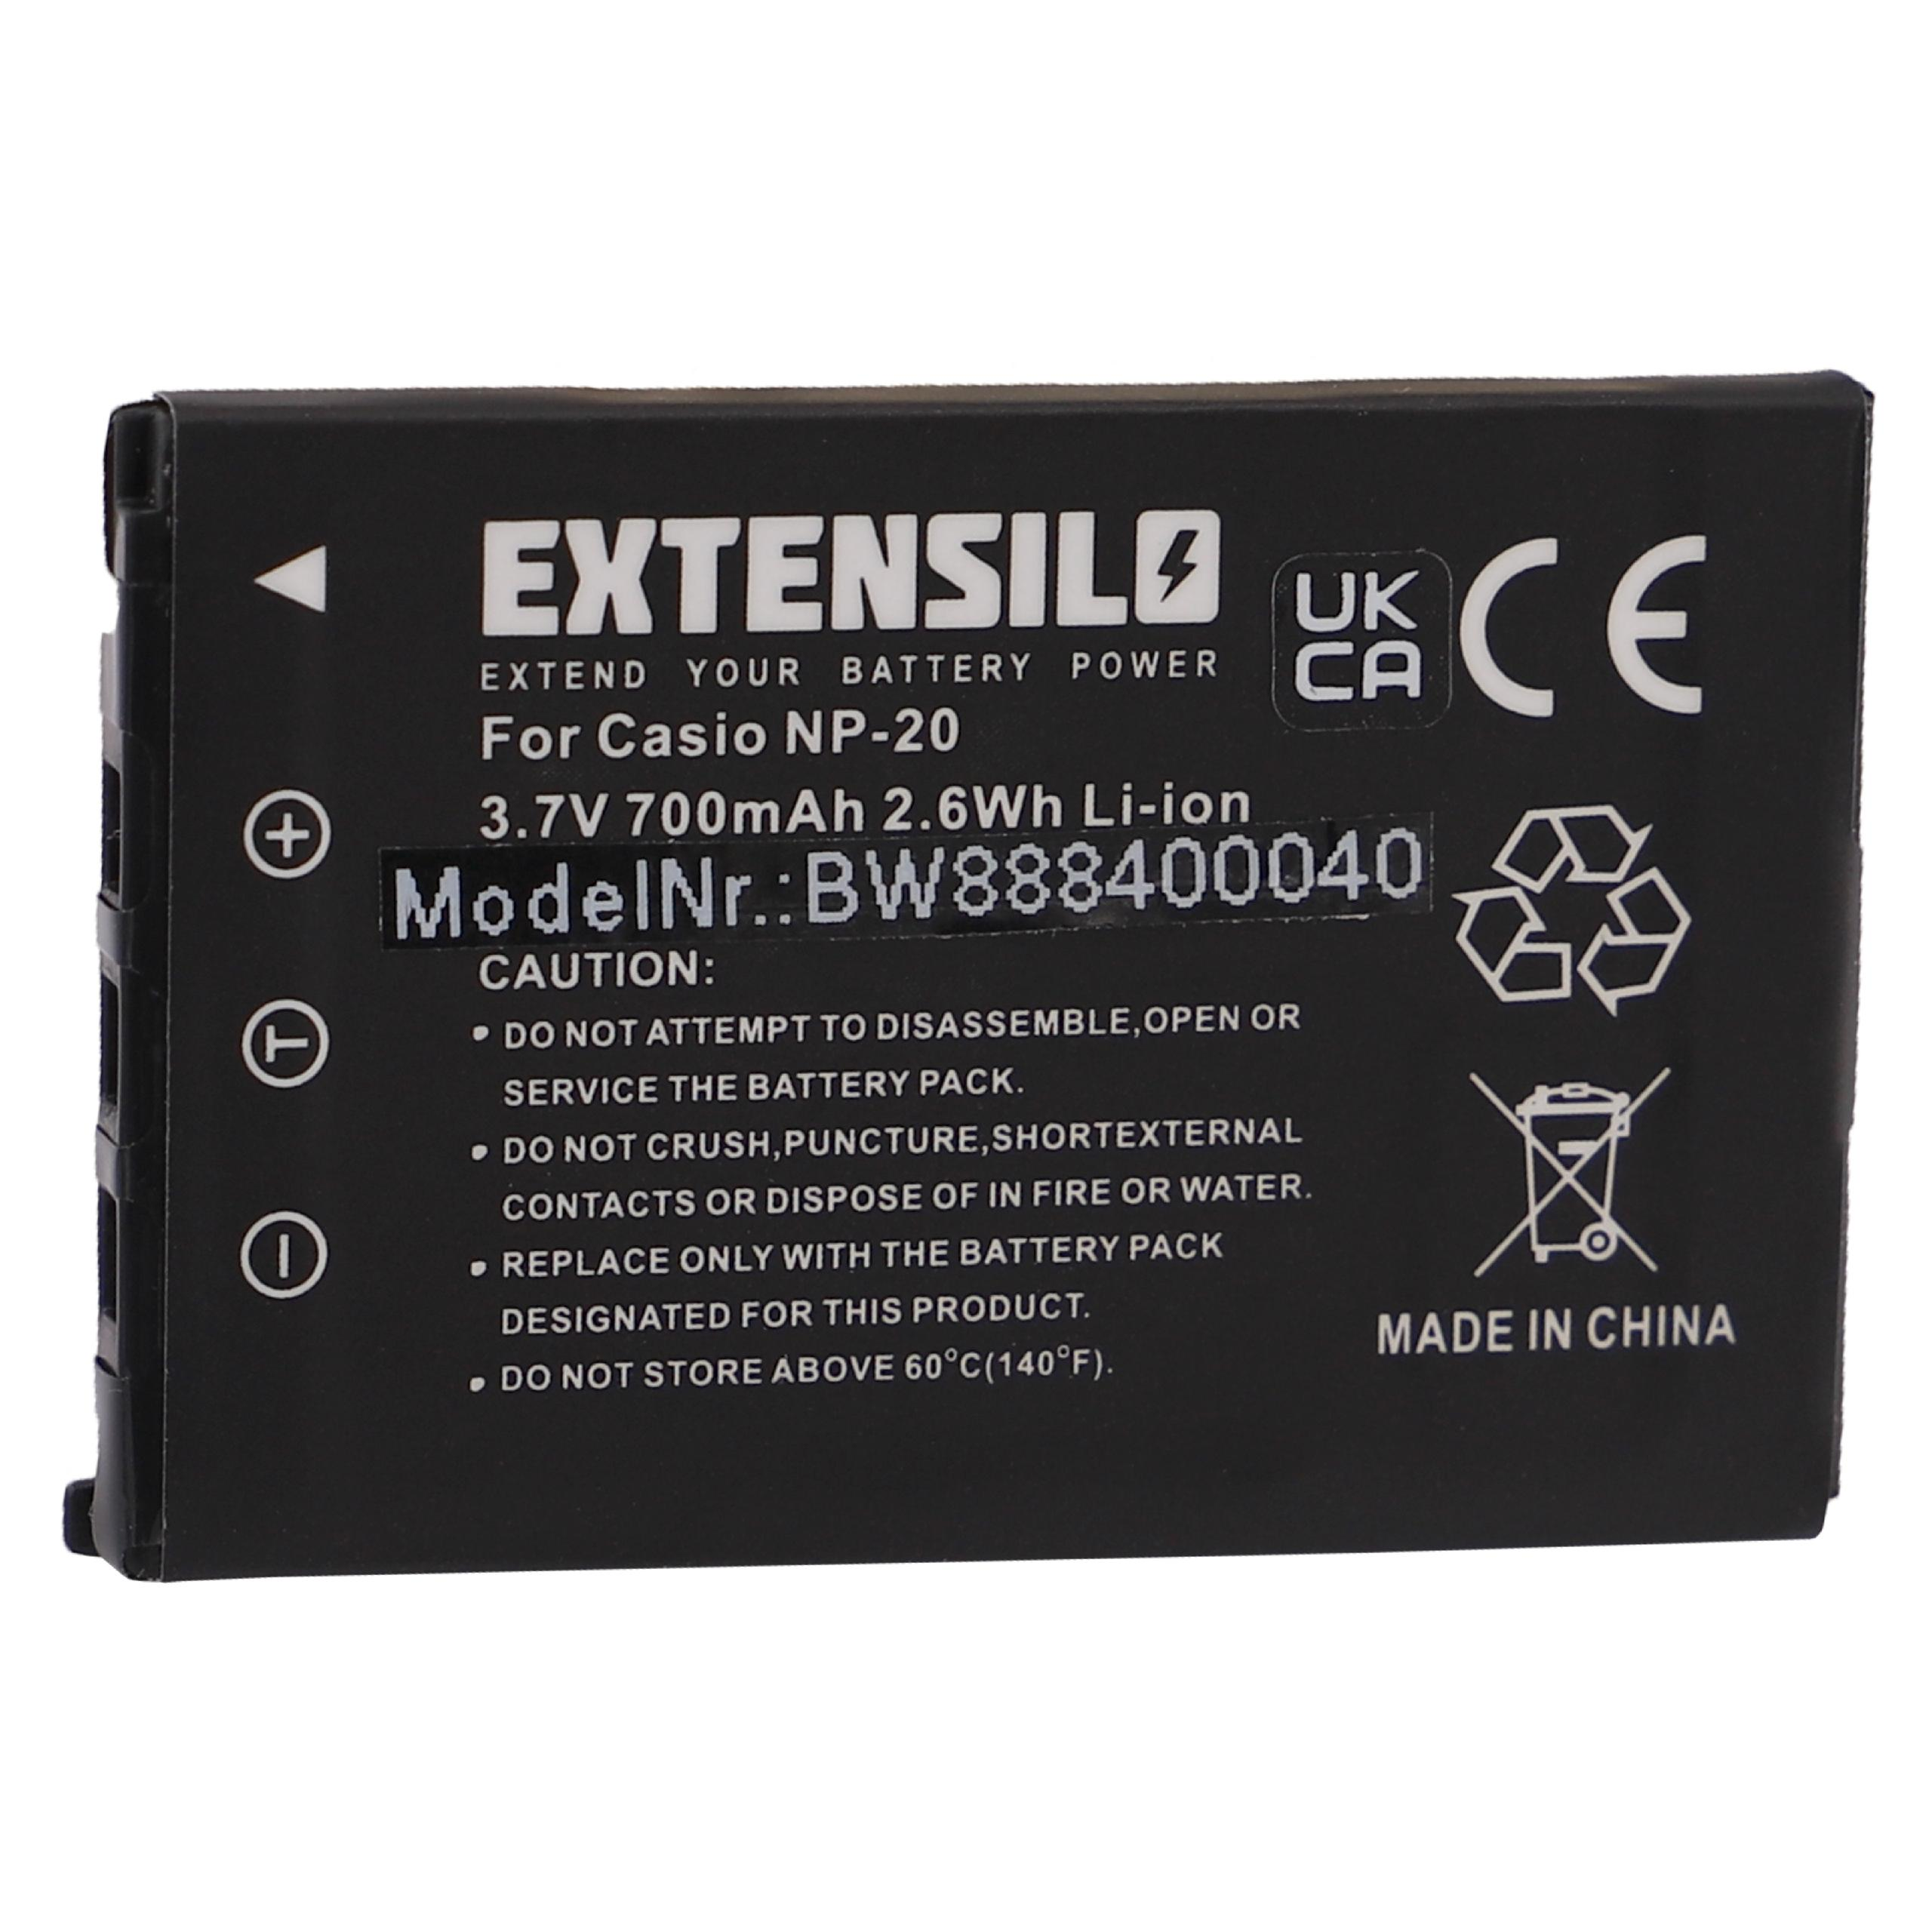 Exilim Casio Akku Volt, Li-Ion 3.7 700 EXTENSILO SX-S770 EX-Z770, - EX-Z8, mit kompatibel Kamera,